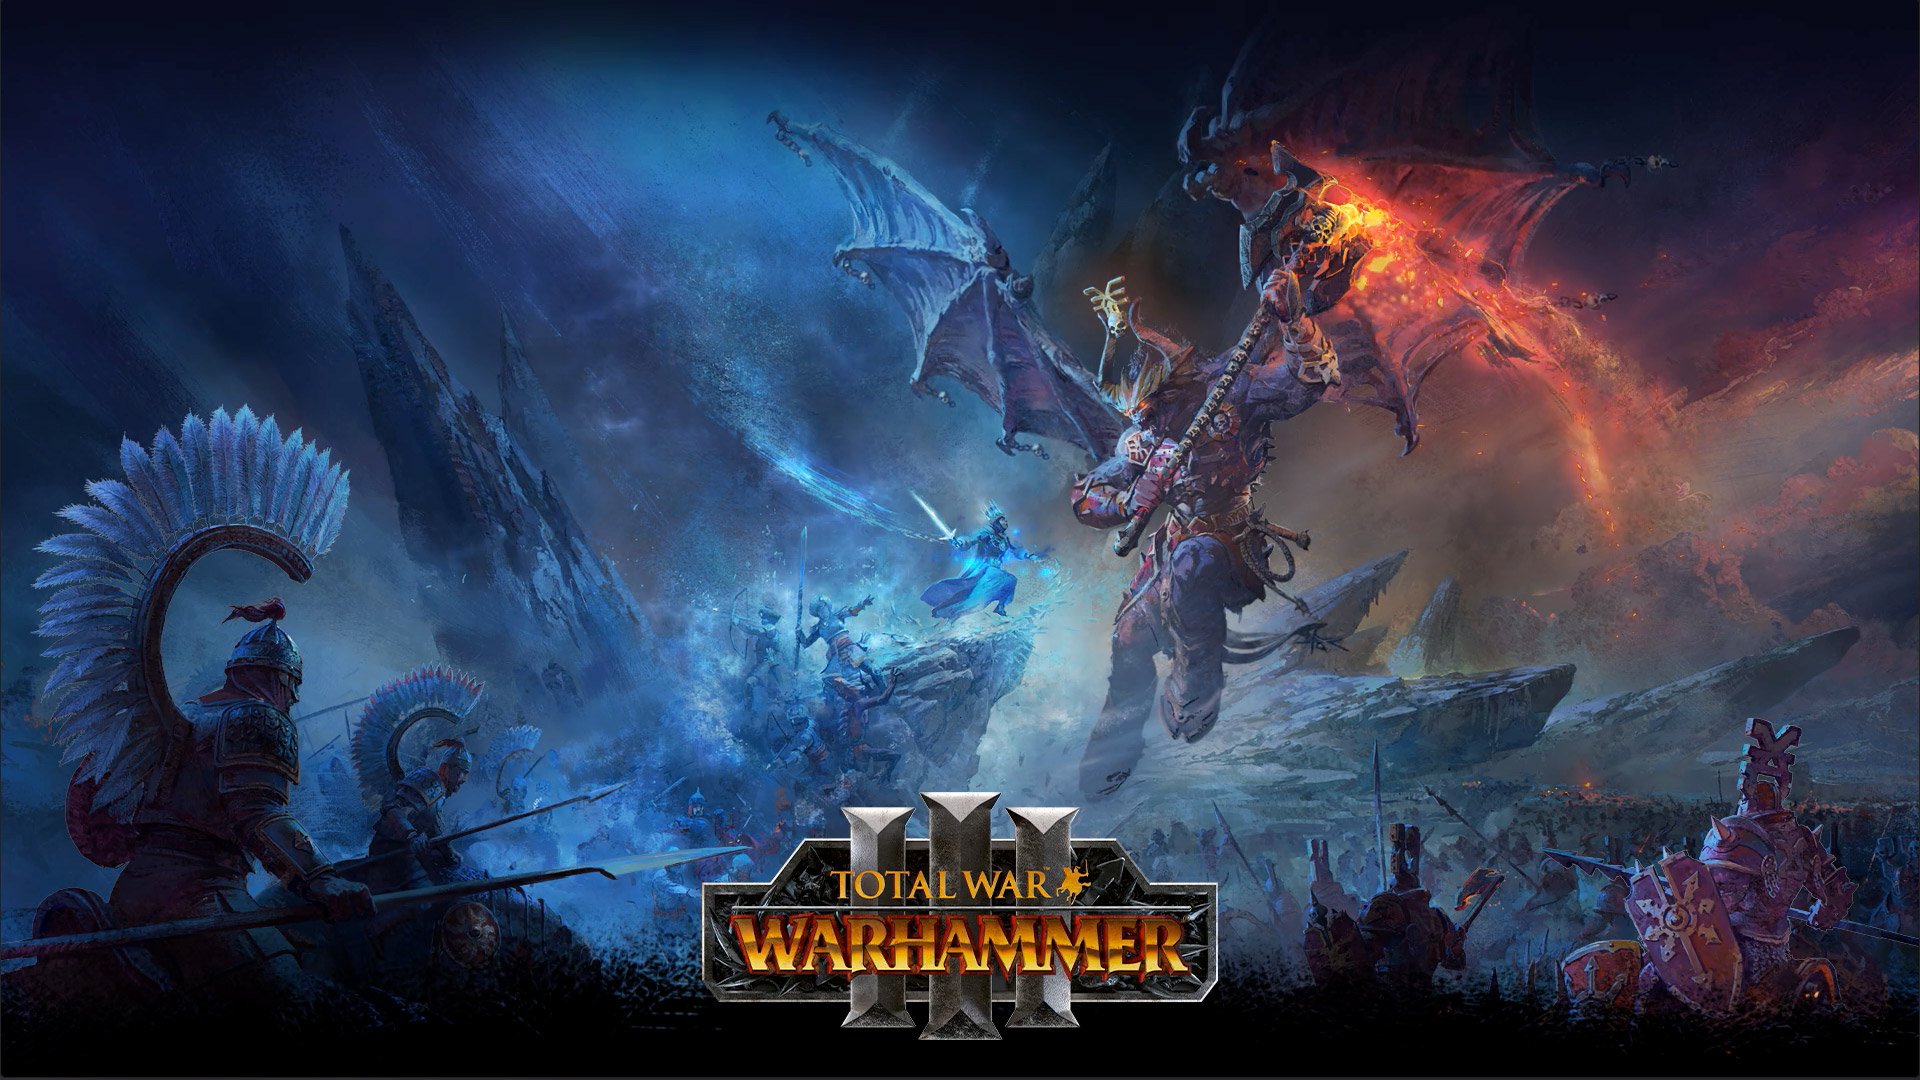 Total War Warhammer 3, 전장 위의 하늘에서 얼음 마법사가 거대한 드래곤형 데몬과 전투를 벌입니다. 